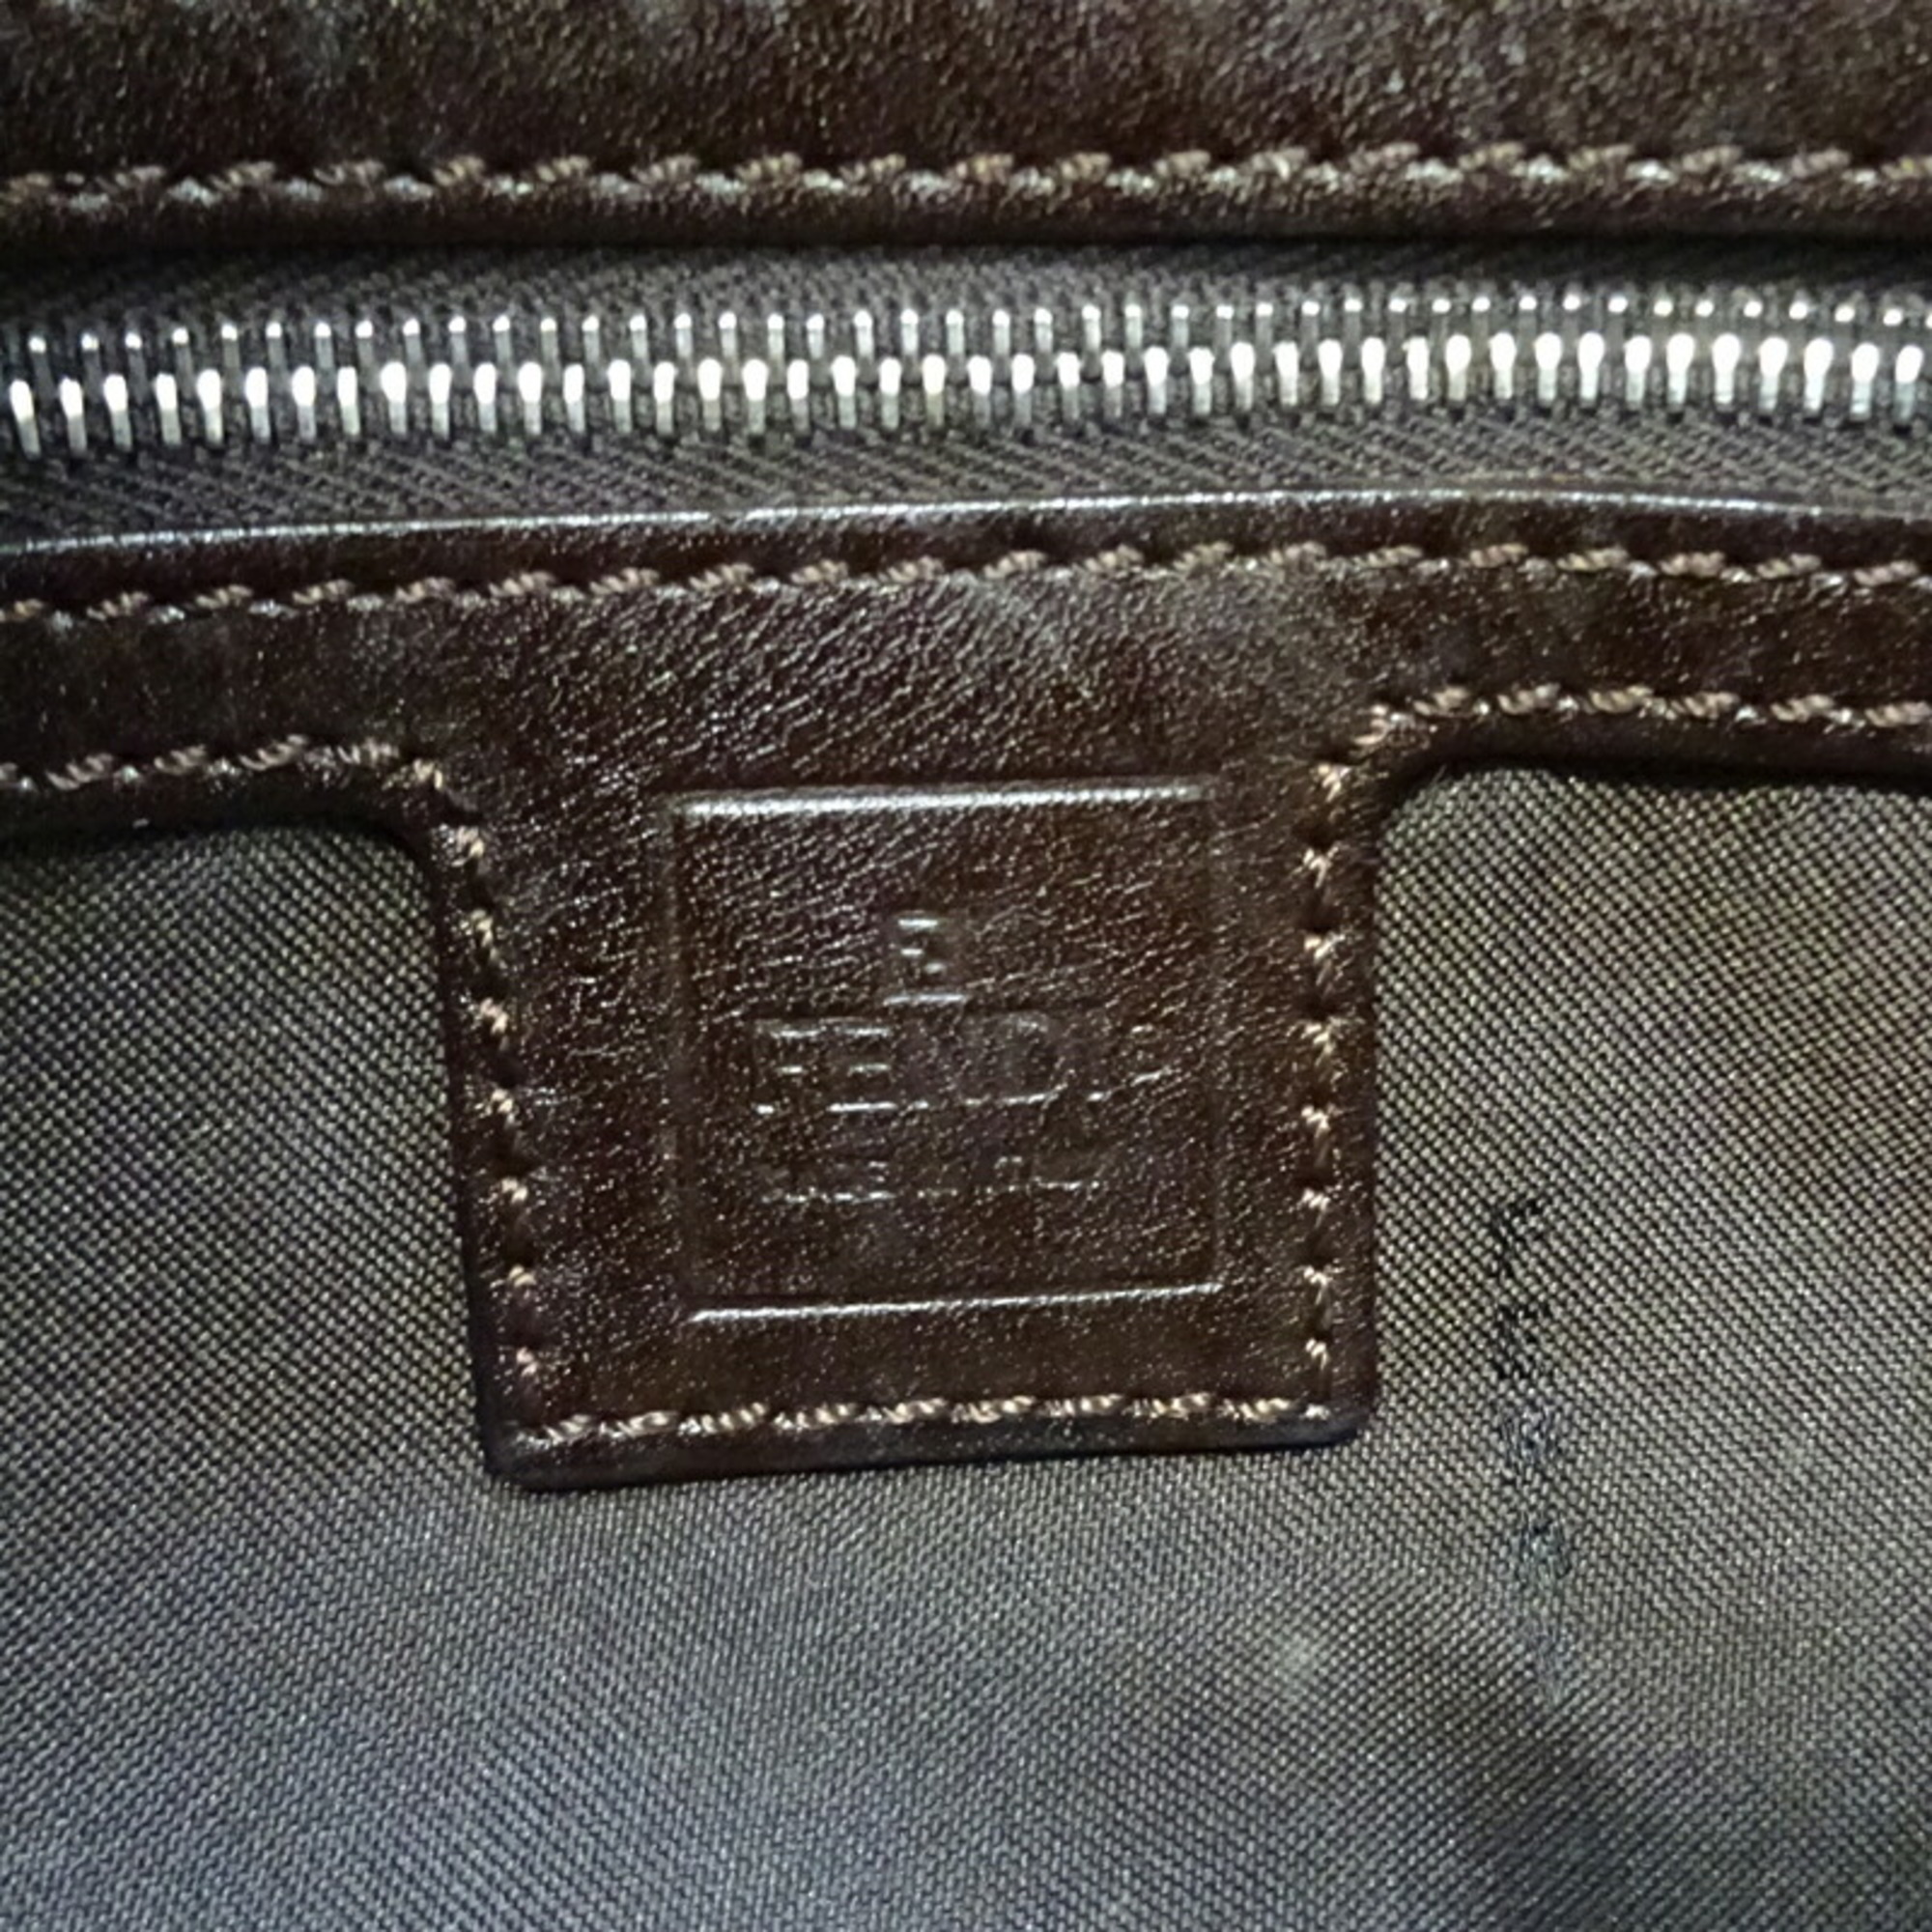 Fendi Mamma Bucket Women's Handbag 2321.26424 Cotton Brown